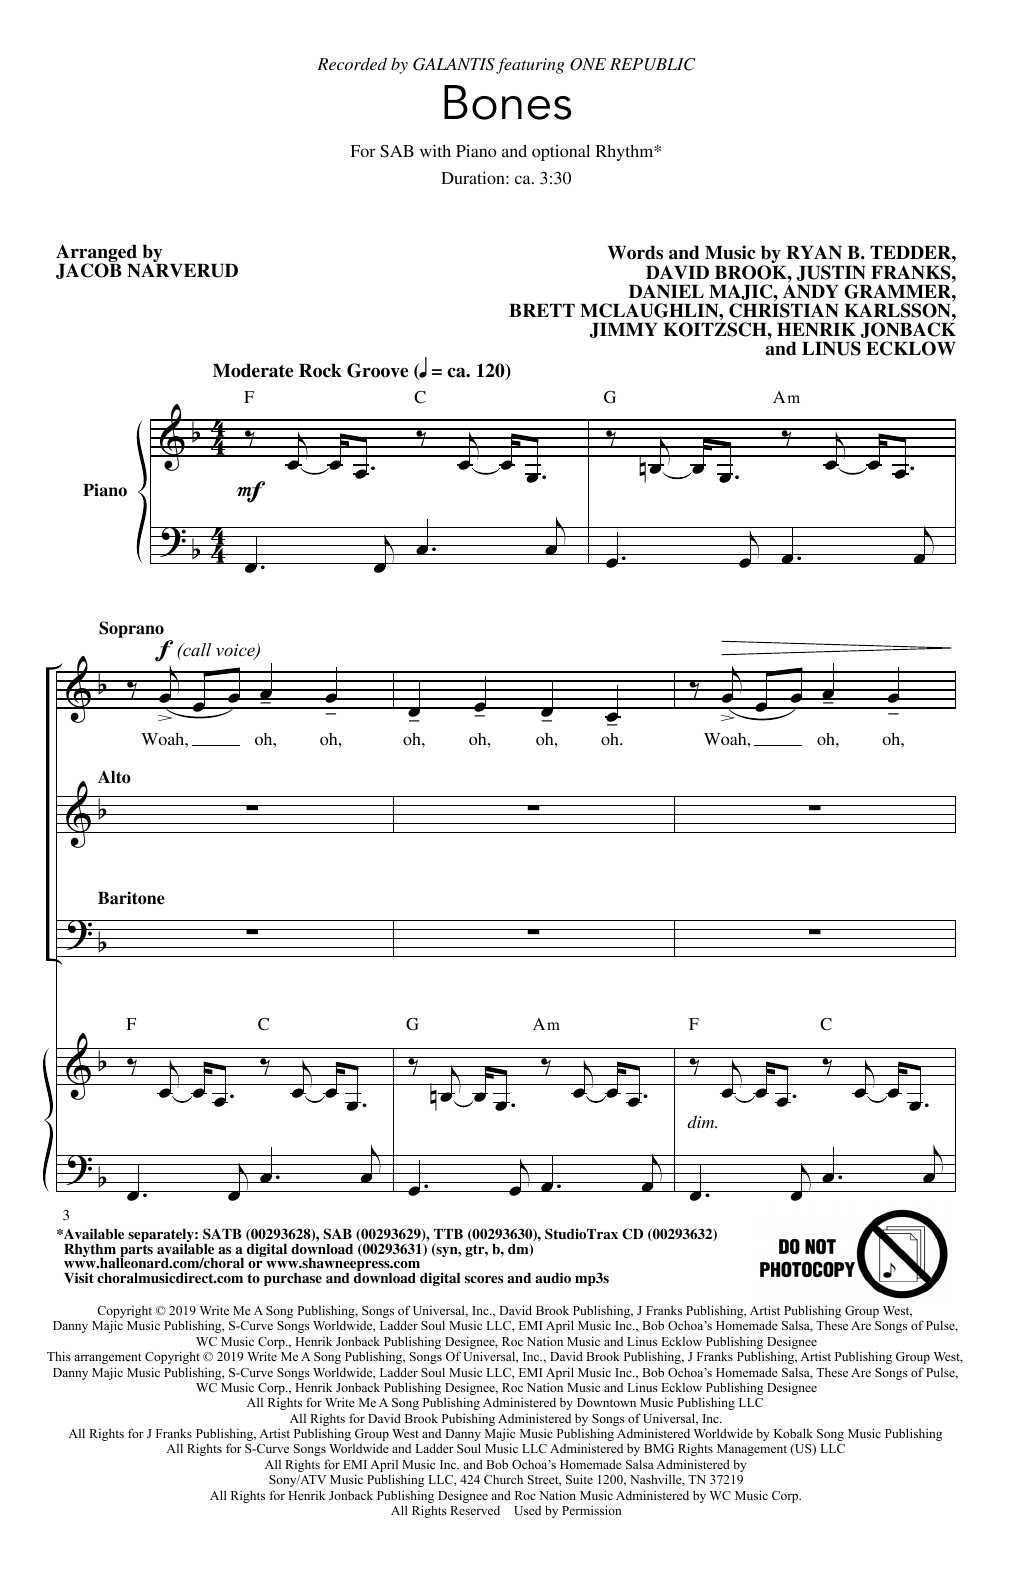 Galantis Bones (feat. OneRepublic) (arr. Jacob Narverud) sheet music notes and chords arranged for SAB Choir